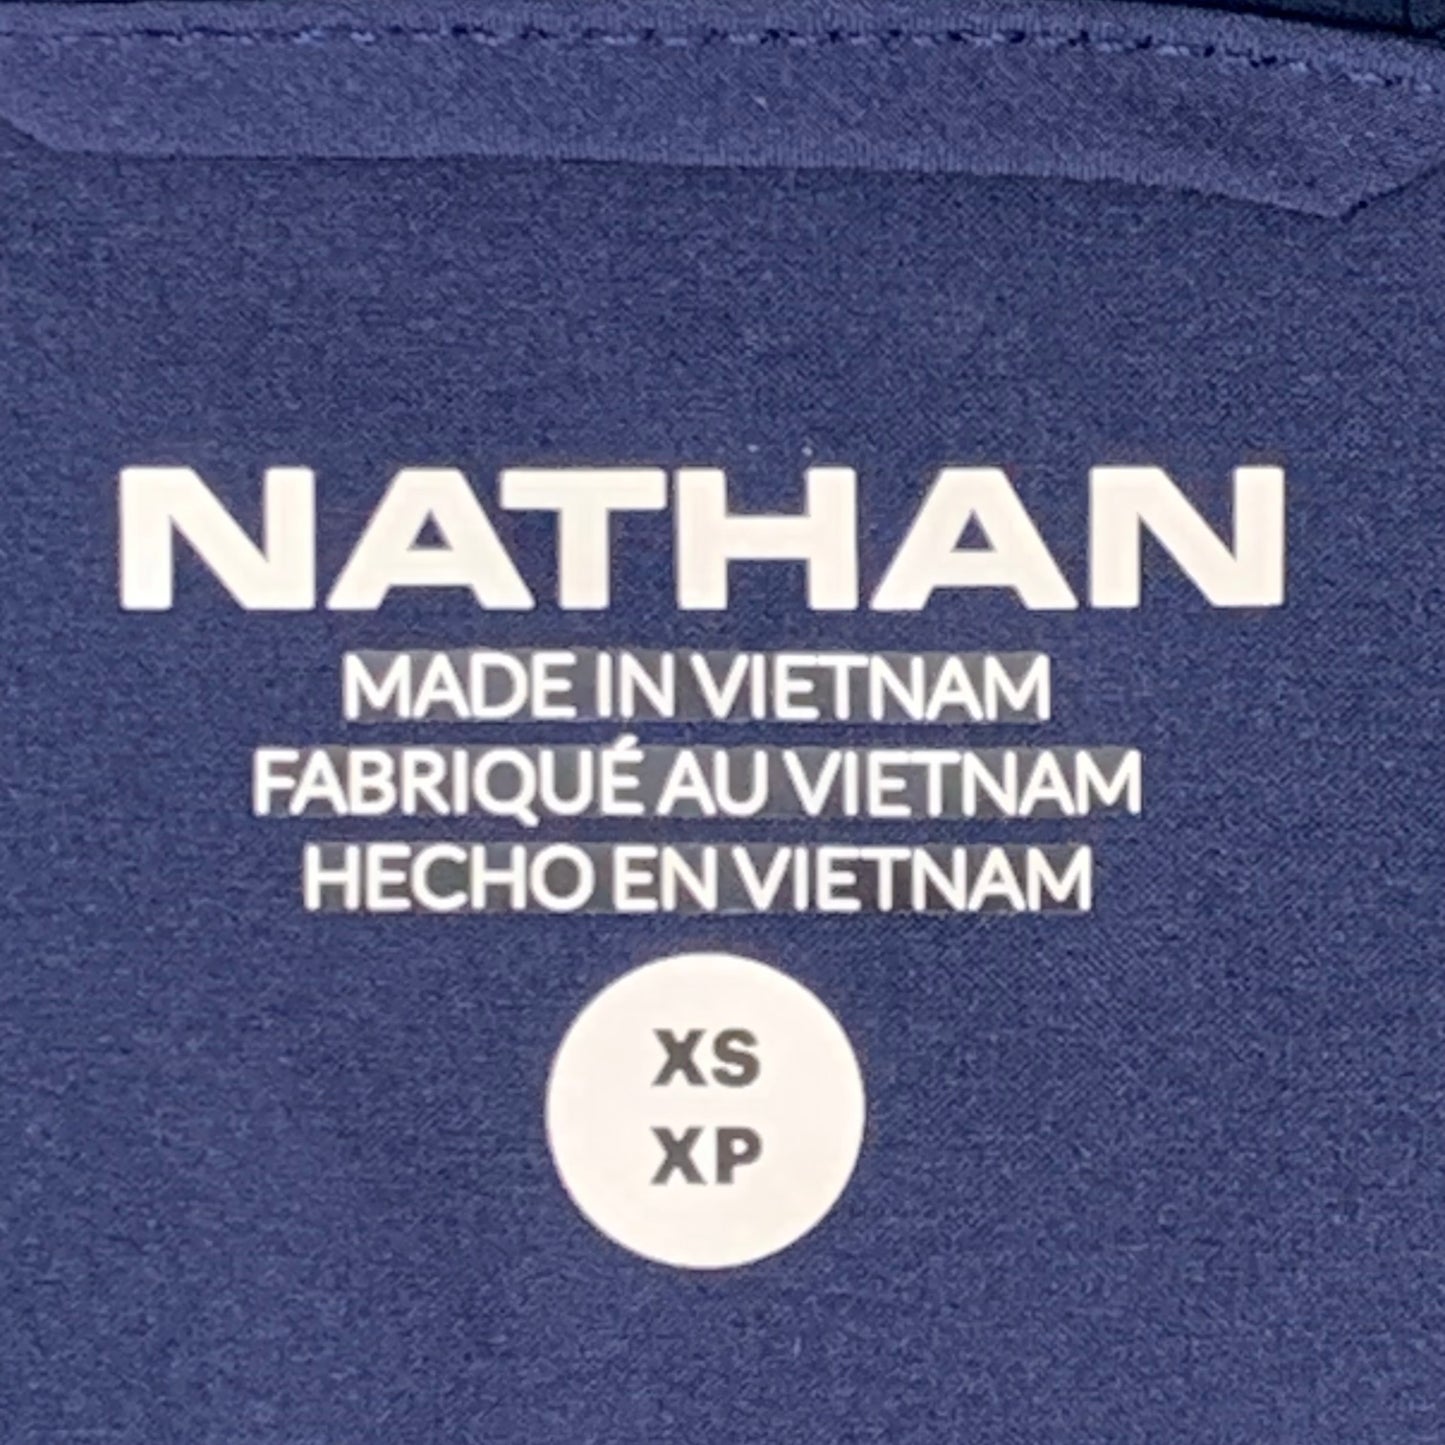 NATHAN Vamos Track Jacket Men's Sz XS Peacoat NS50320-60135-XS (New)